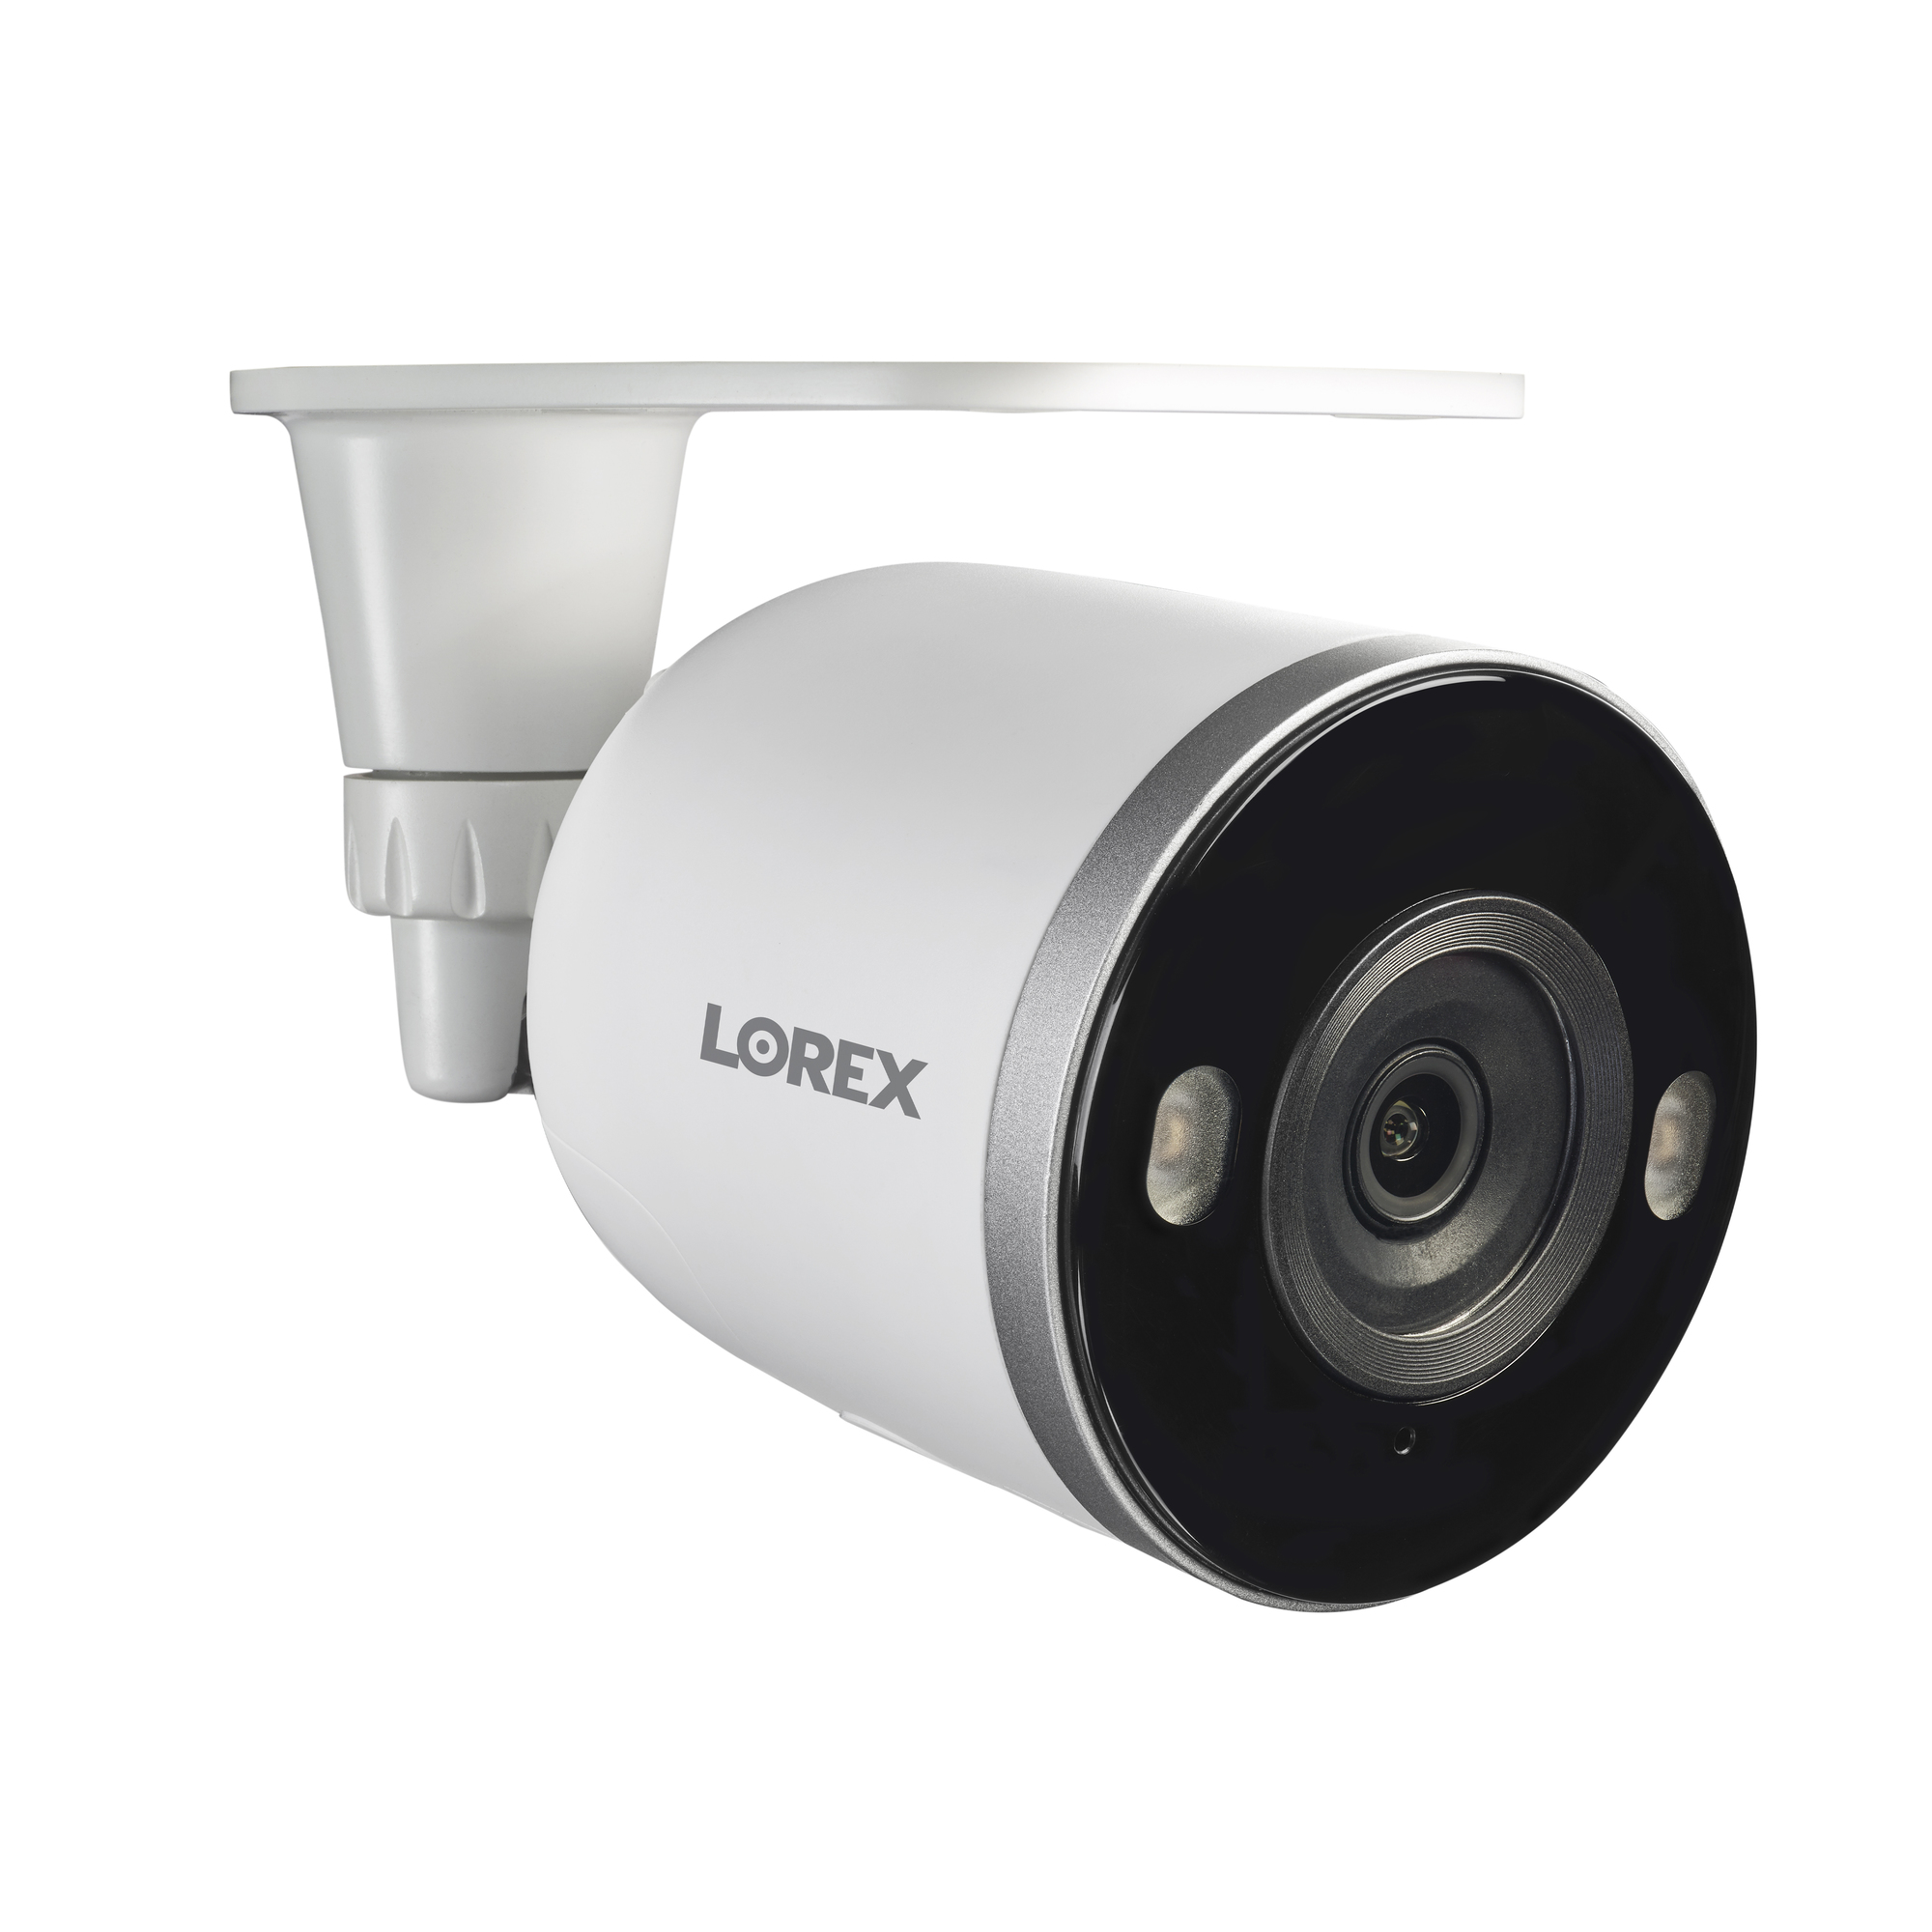 Lorex, 2K Spotlight Wirefree Camera, Product Style DVR/monitoring kit, Camera (qty.) 1 Resolution 2K, Model W482CAD-E